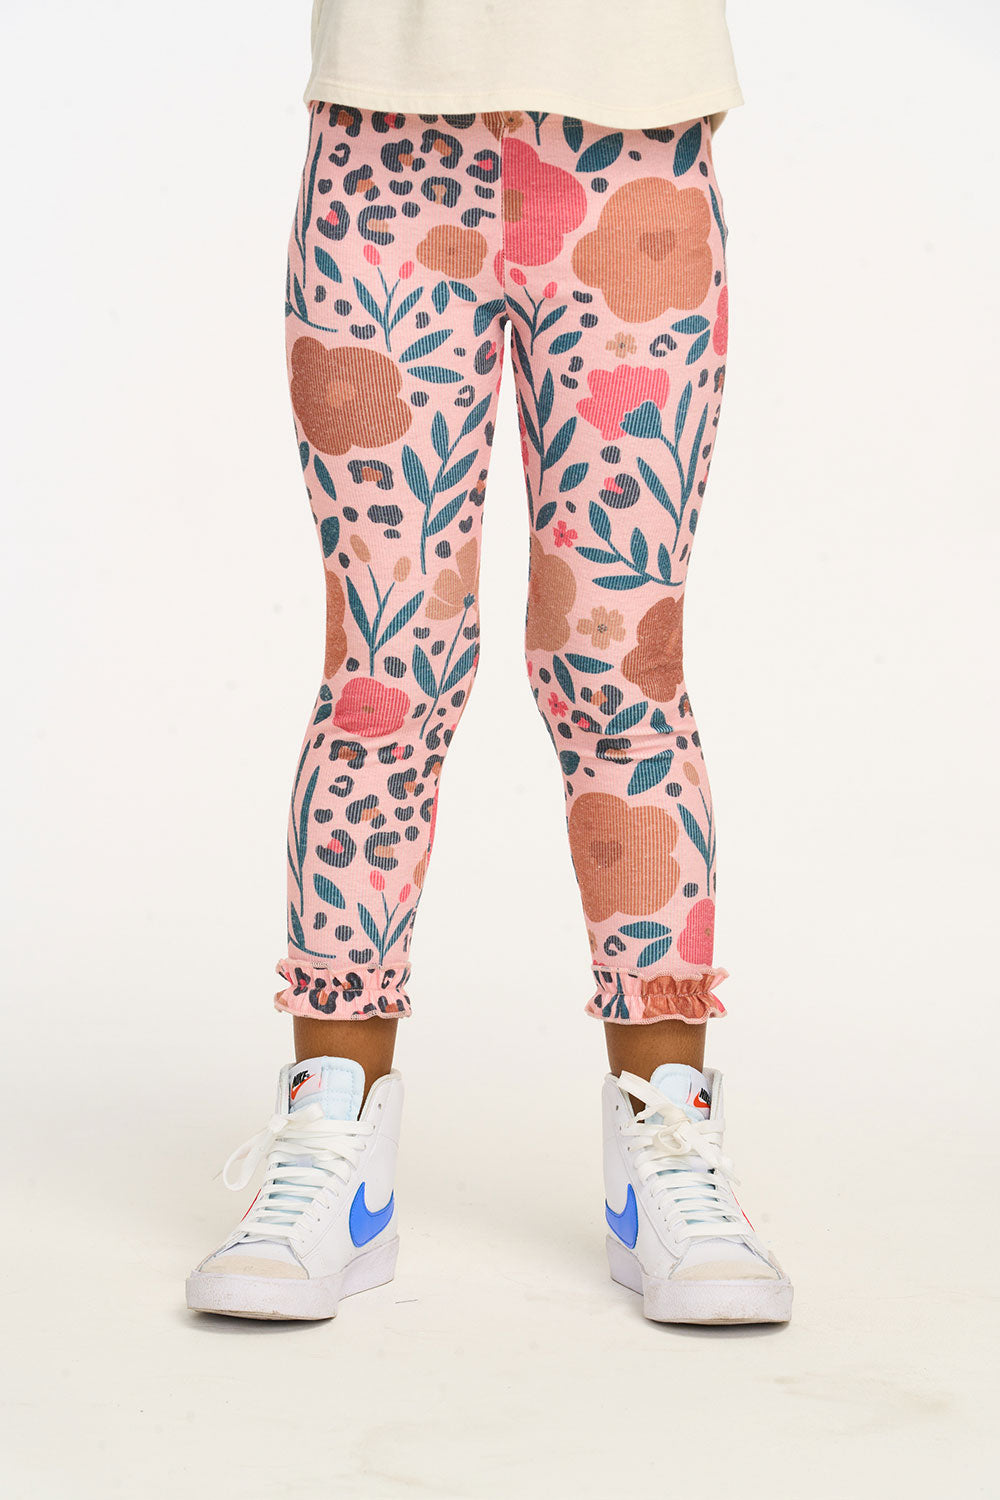 Bottom Ruffle Floral & Leopard Print Legging GIRLS chaserbrand